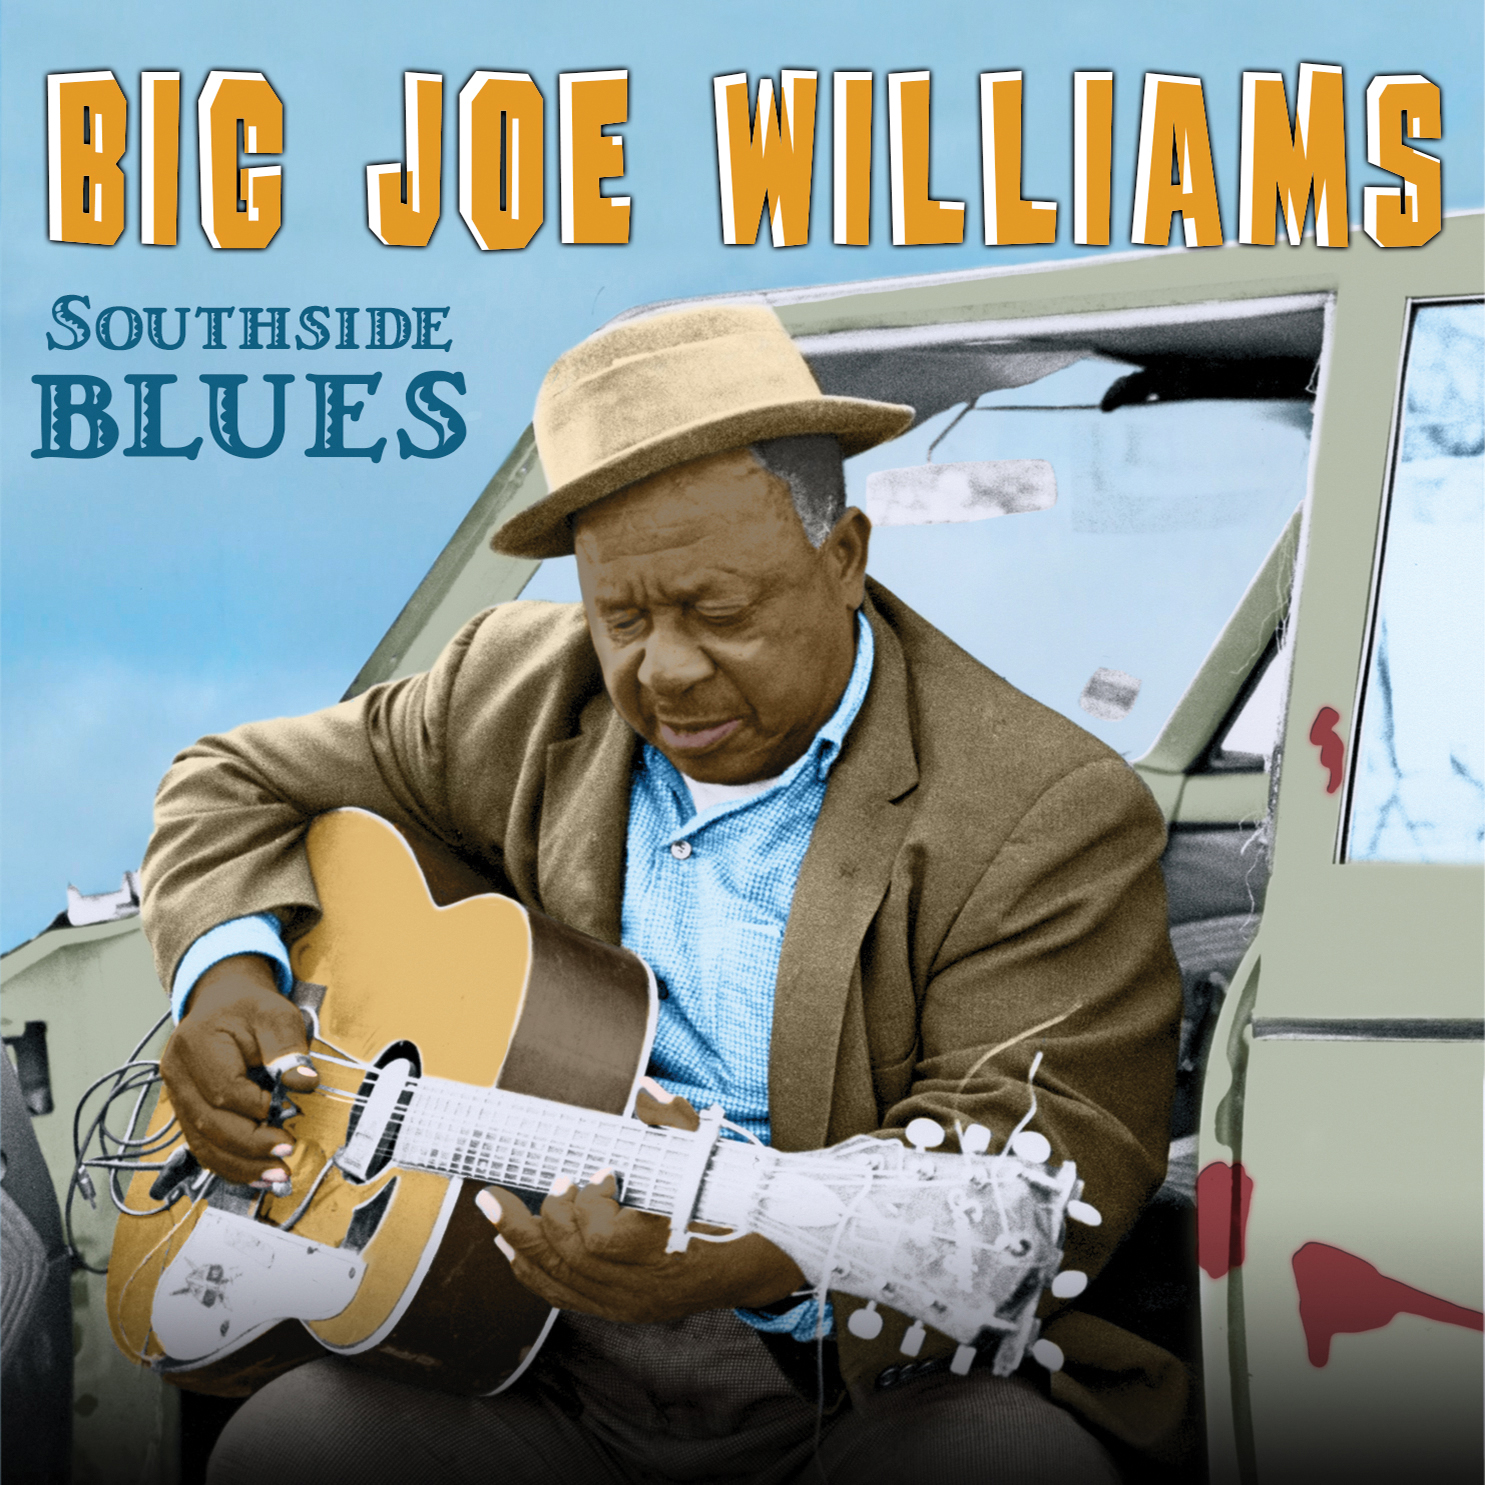 Big Joe Williams Southside Blues image of album cover